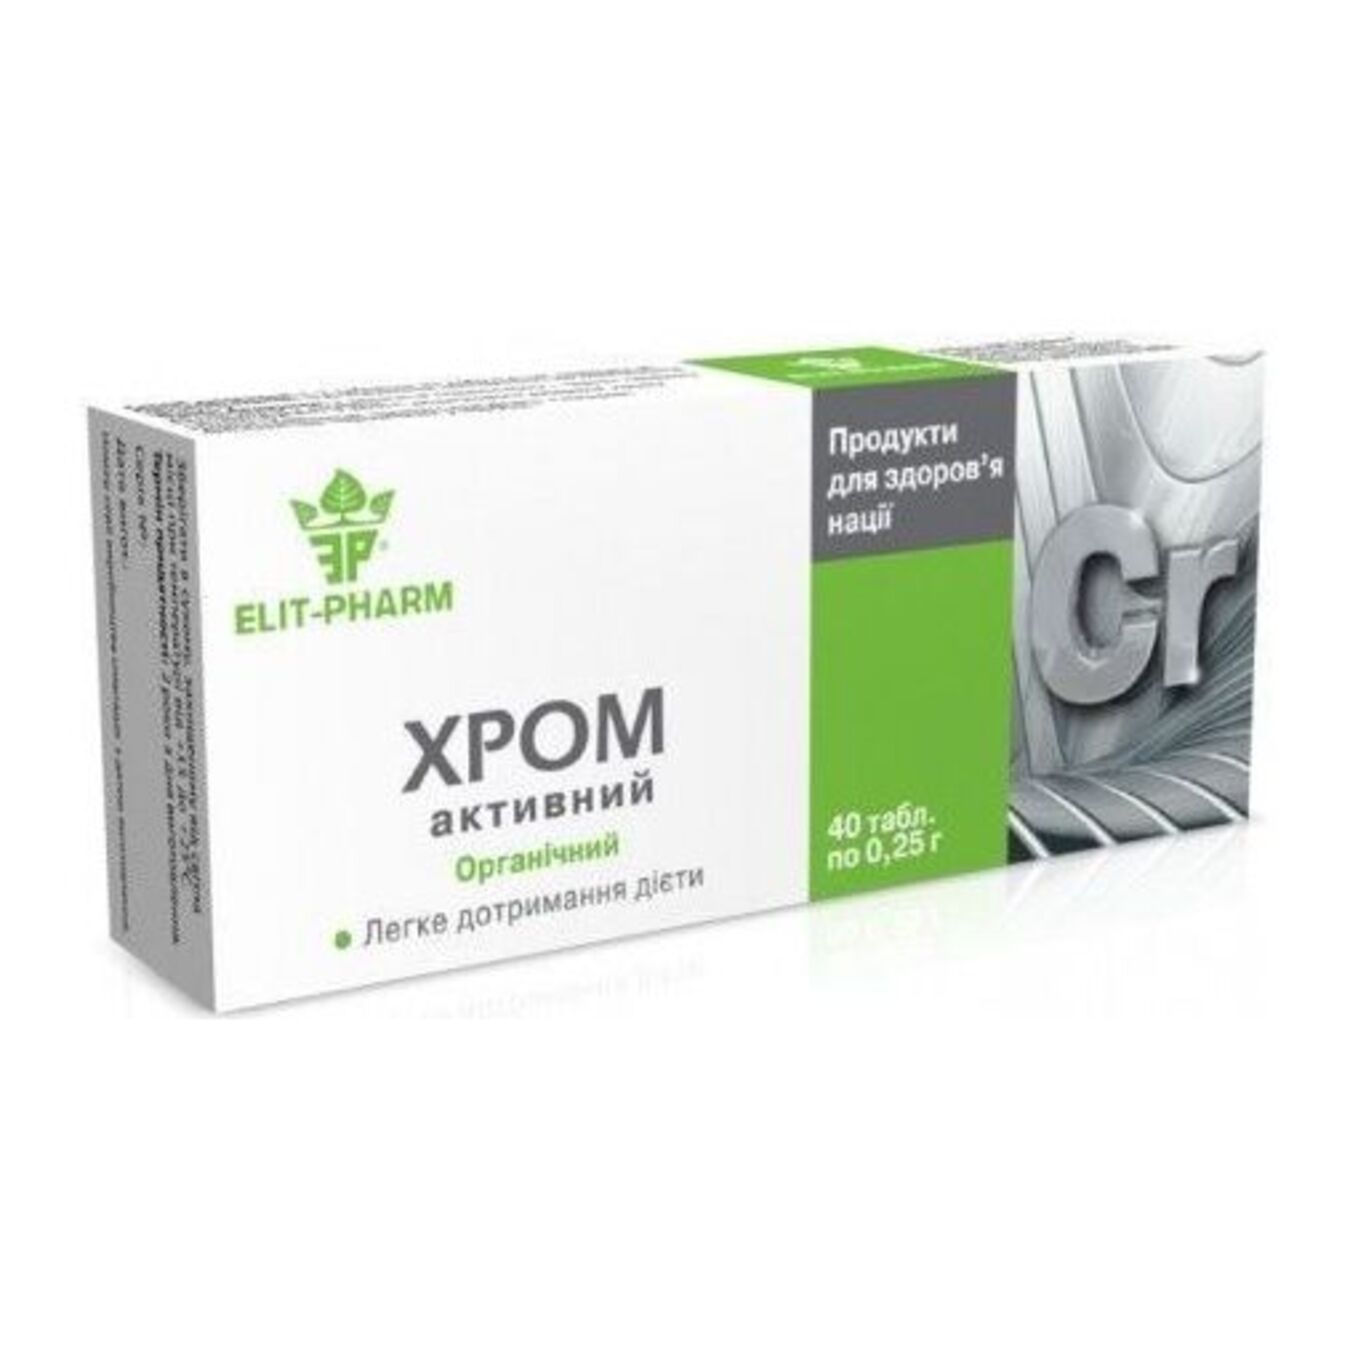 Elite-Pharm active biological additives Chromium active No. 40